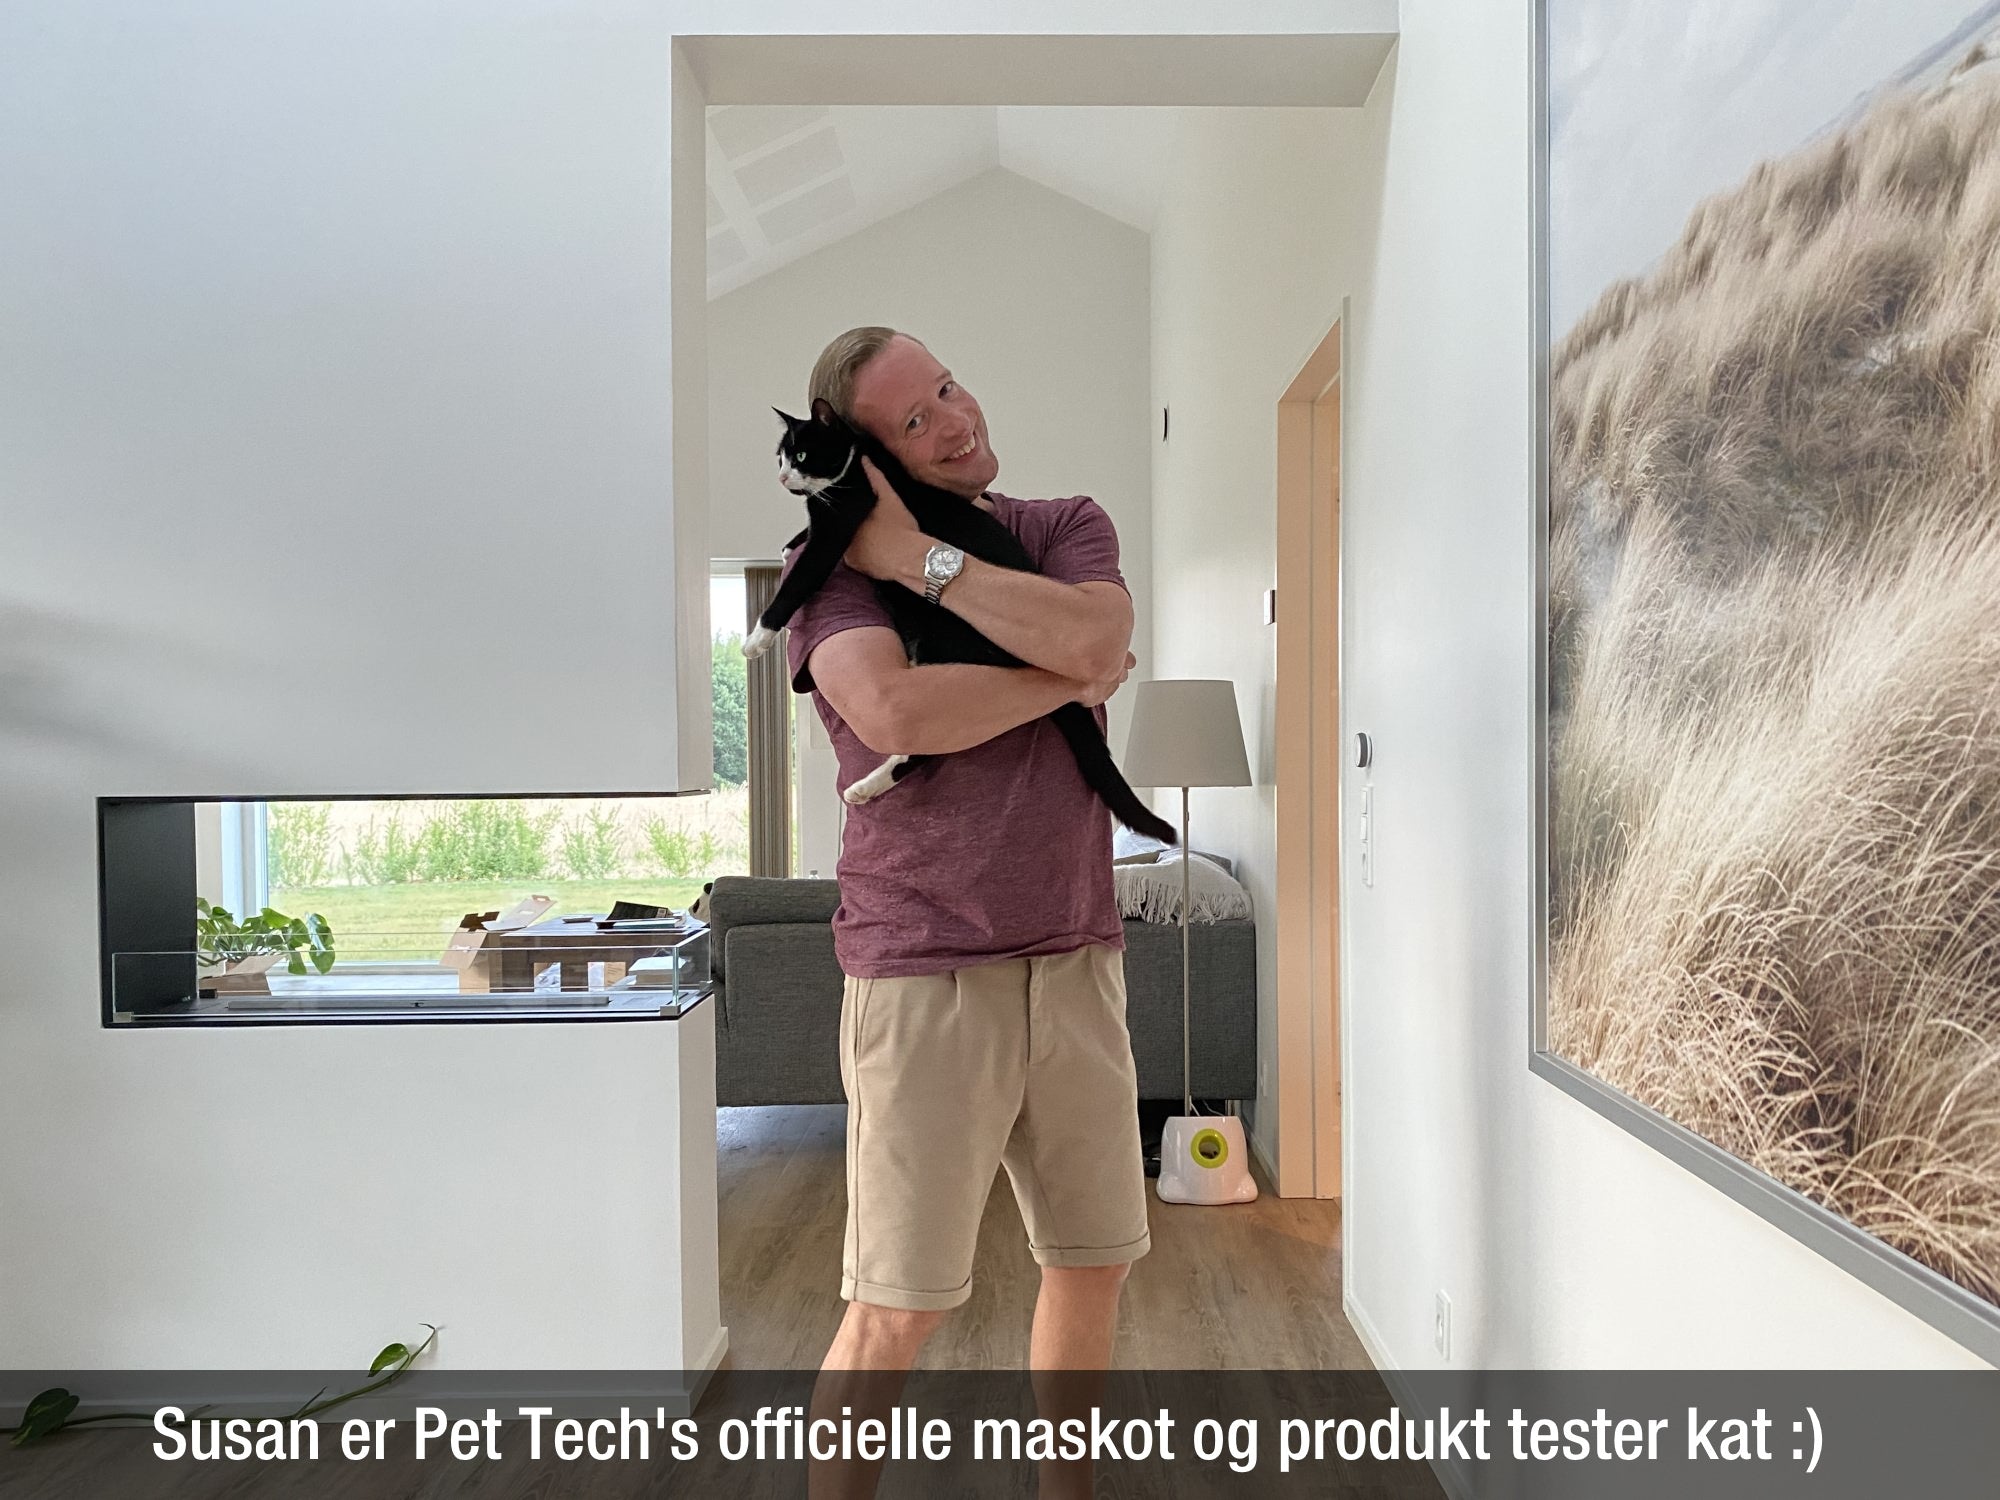 Susan er Pet Tech's officielle produkt tester kat